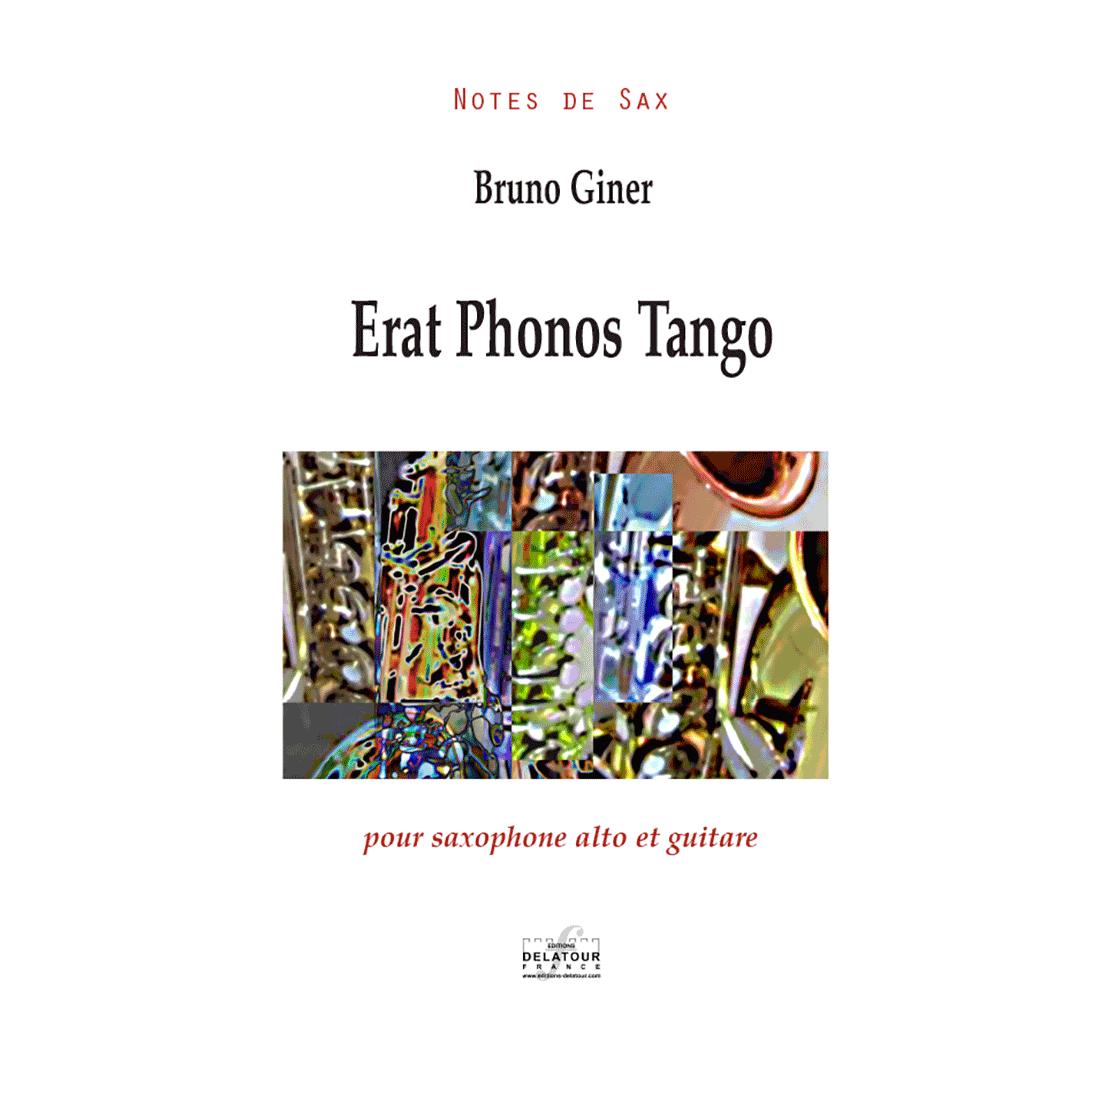 Erat Phonos Tango for alto saxophone and guitar